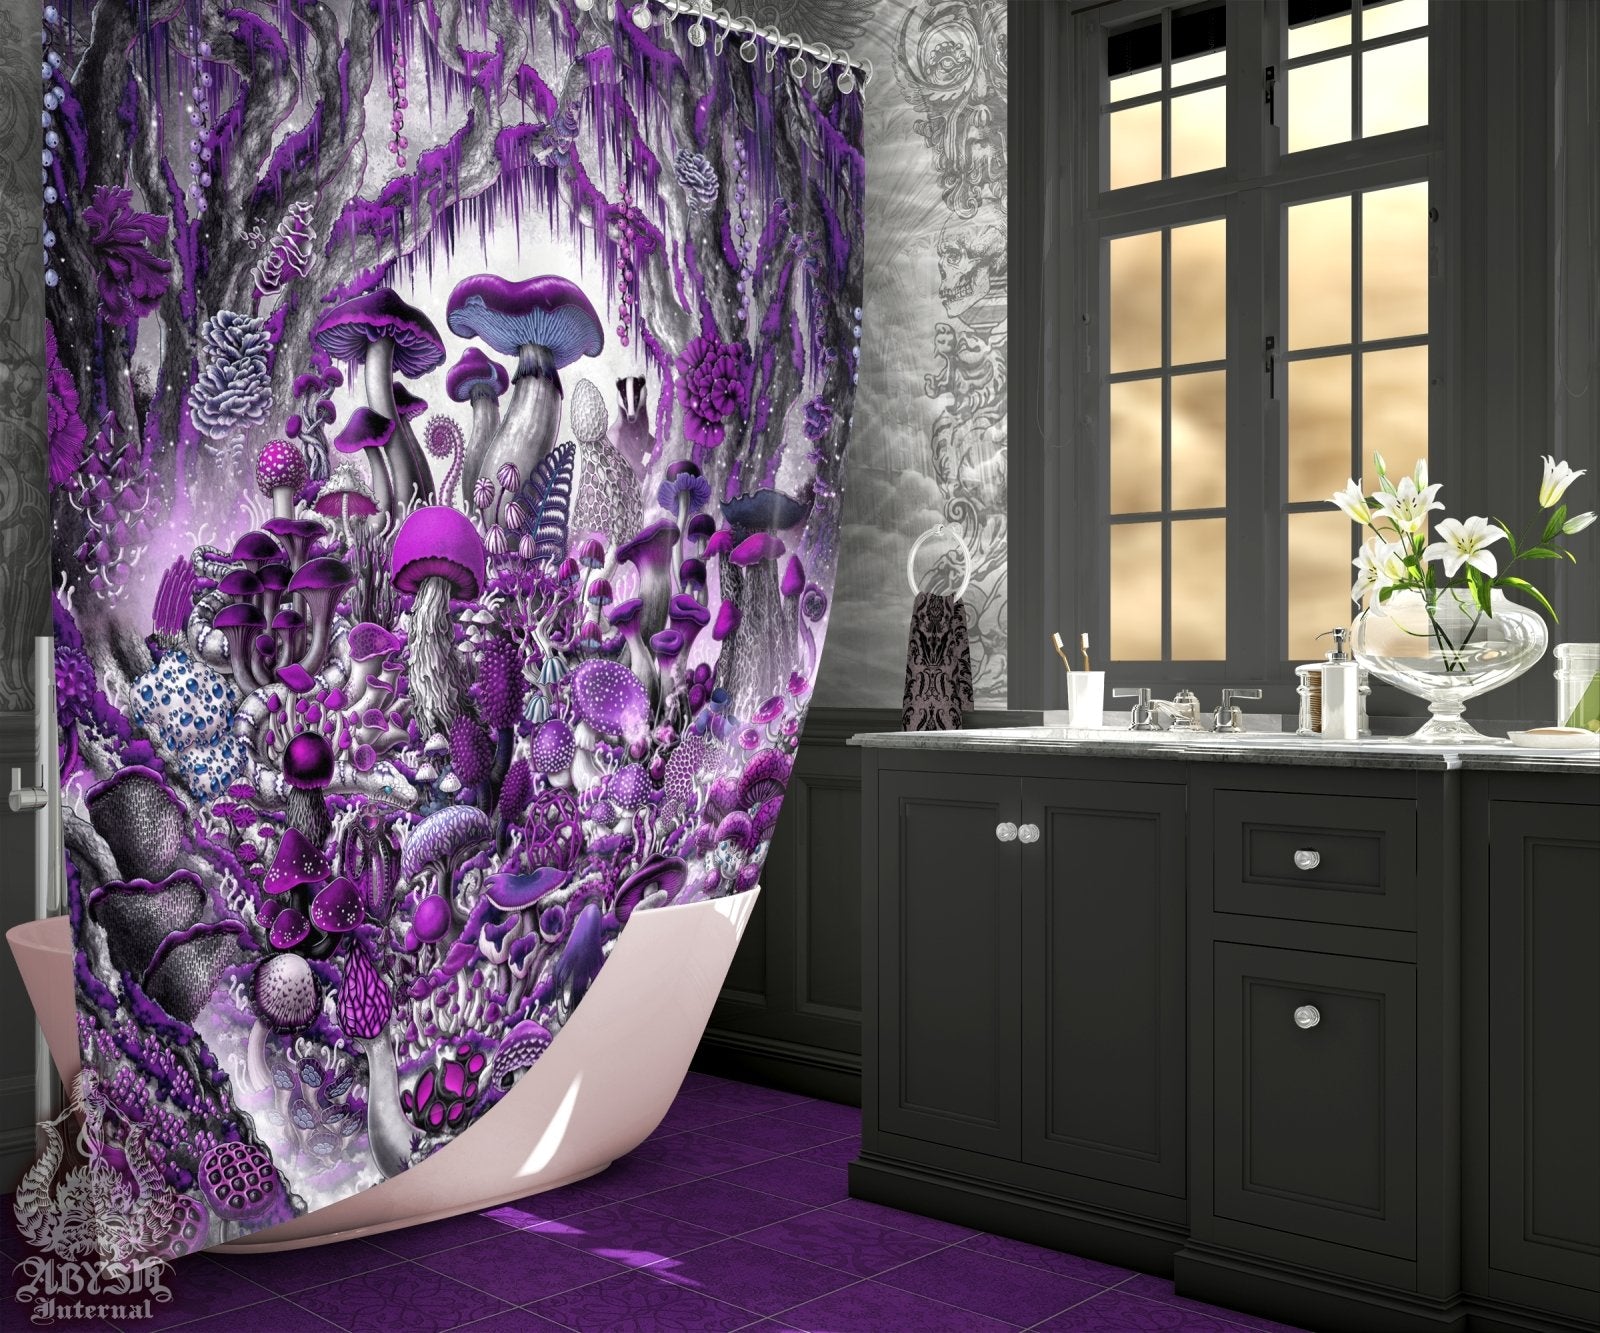 Gothic Mushrooms Shower Curtain, Dark Bathroom Decor, Fantasy Home Art, Mycology Print - Magic Shrooms, Purple White Goth - Abysm Internal